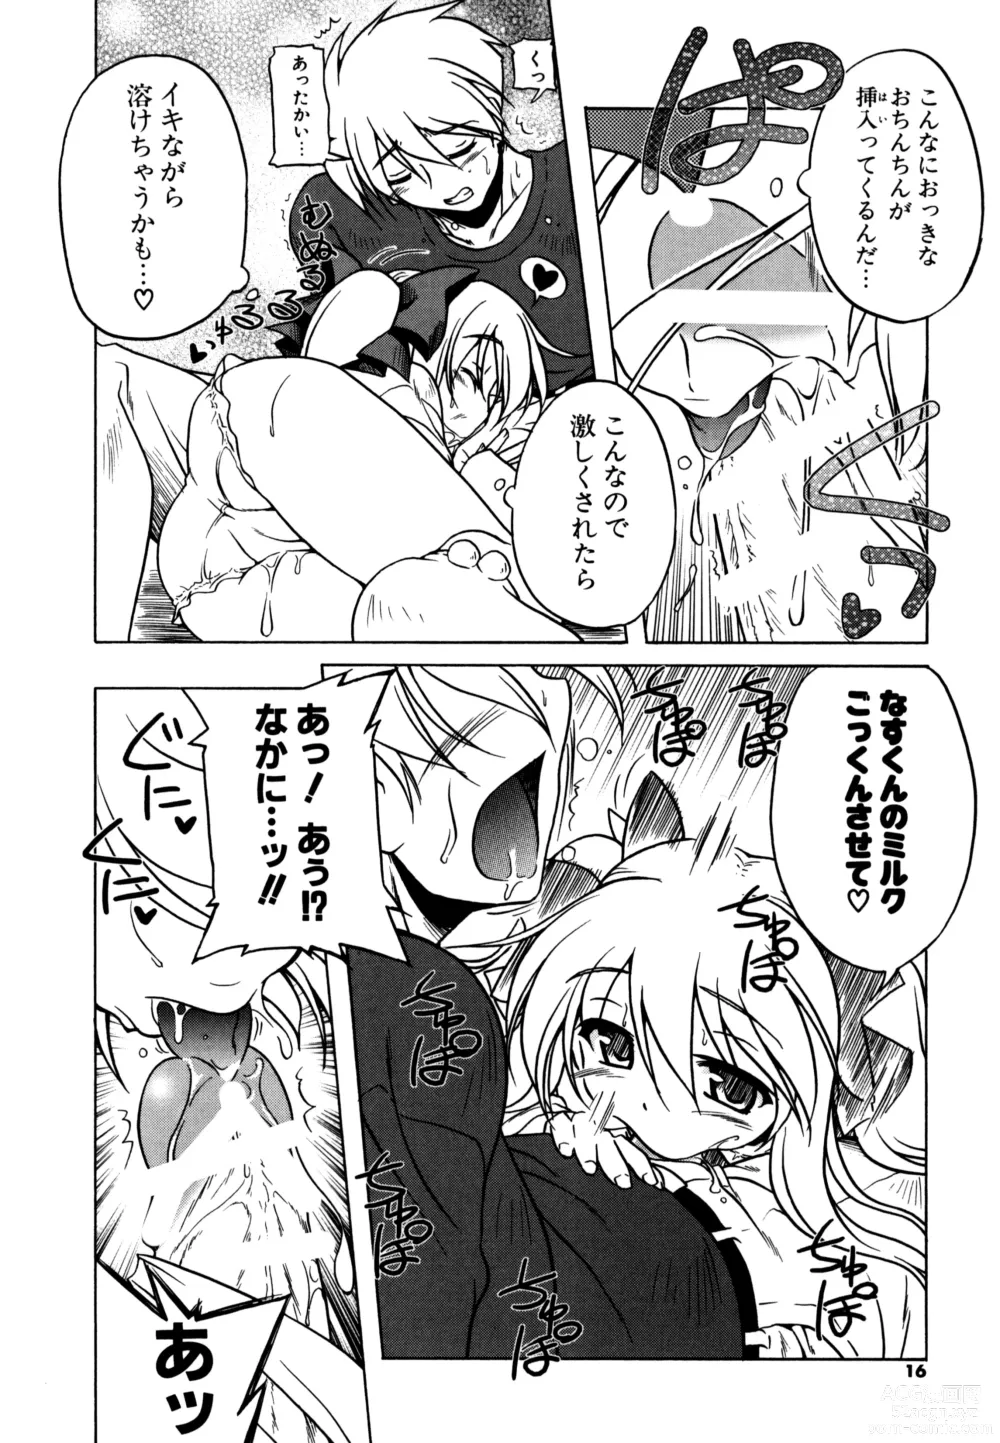 Page 14 of manga Pink Panzer